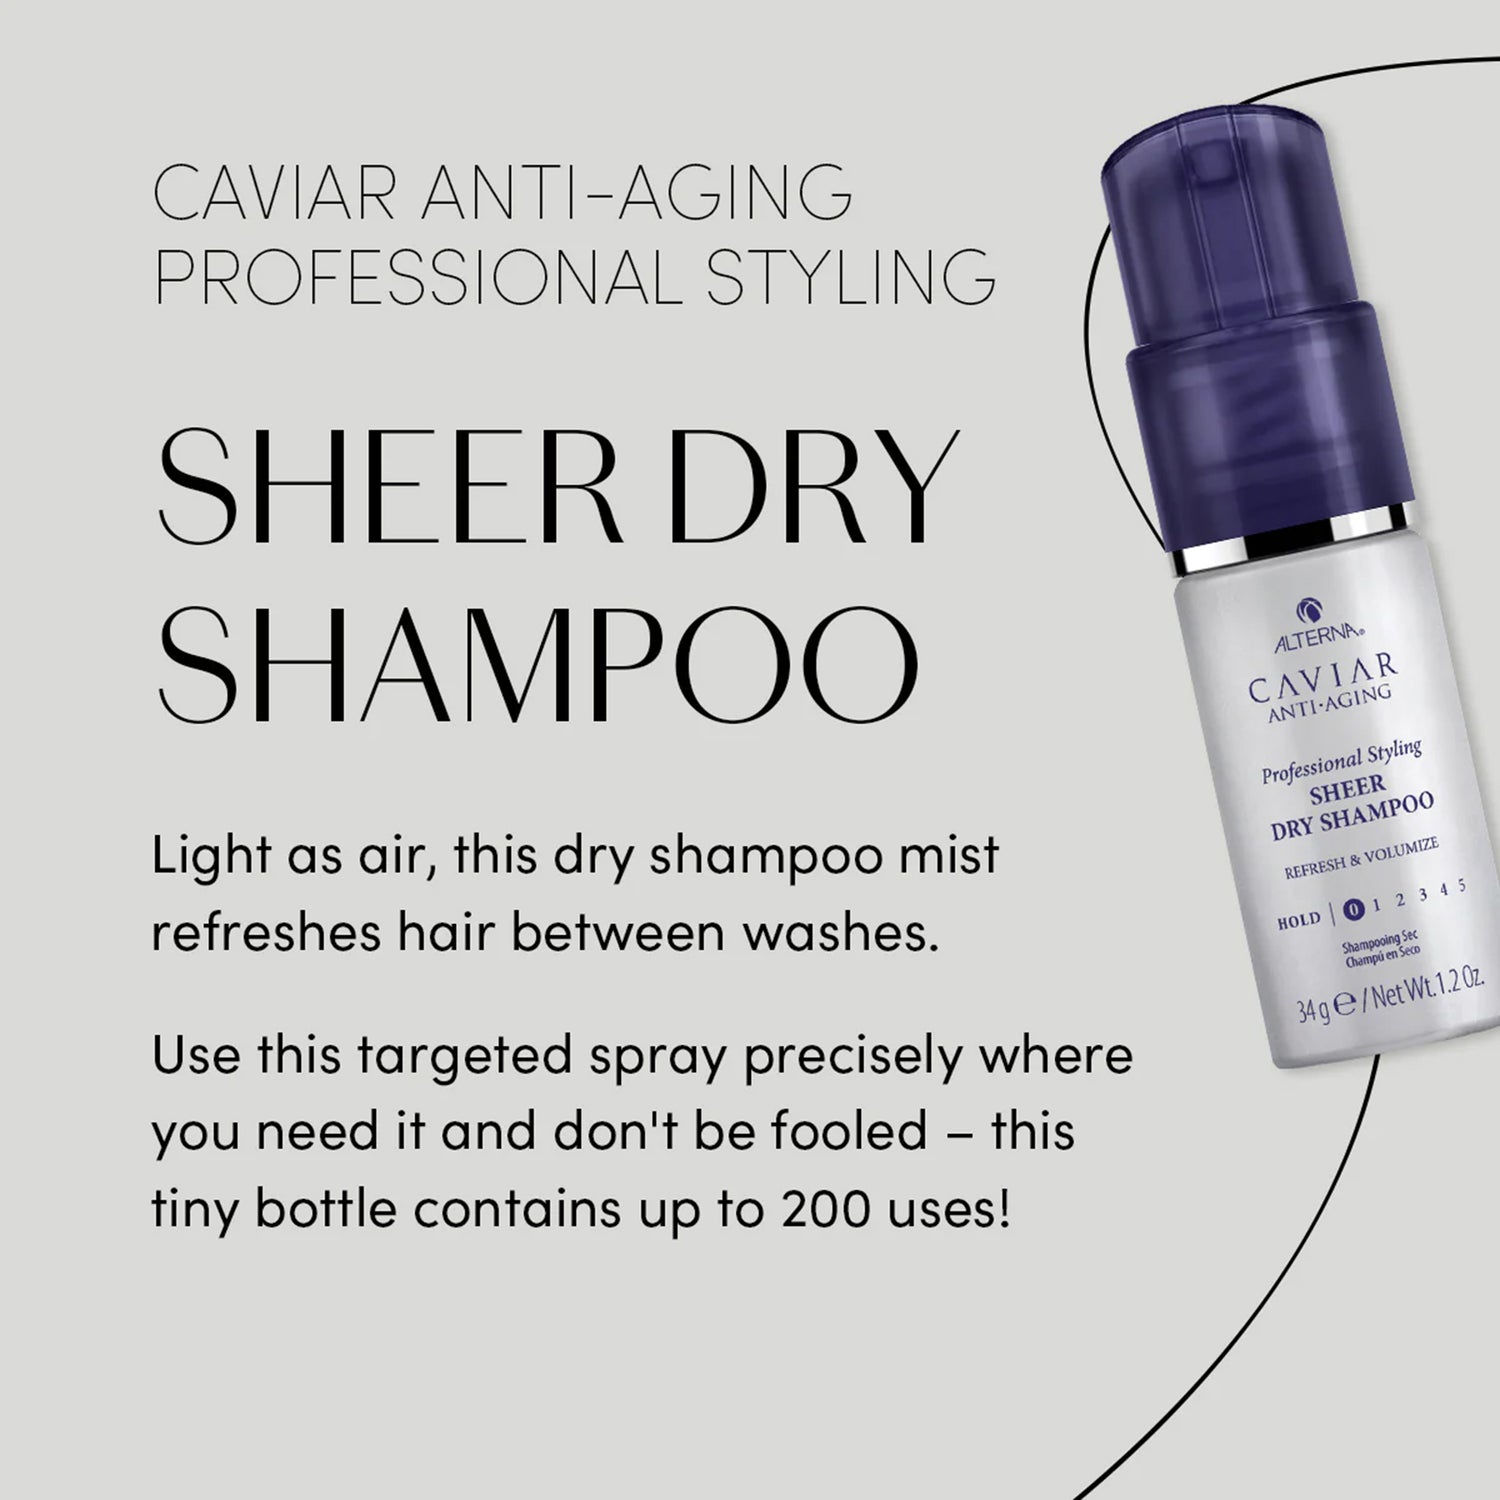 Caviar Anti-Aging Professional Styling Sheer Dry Shampoo